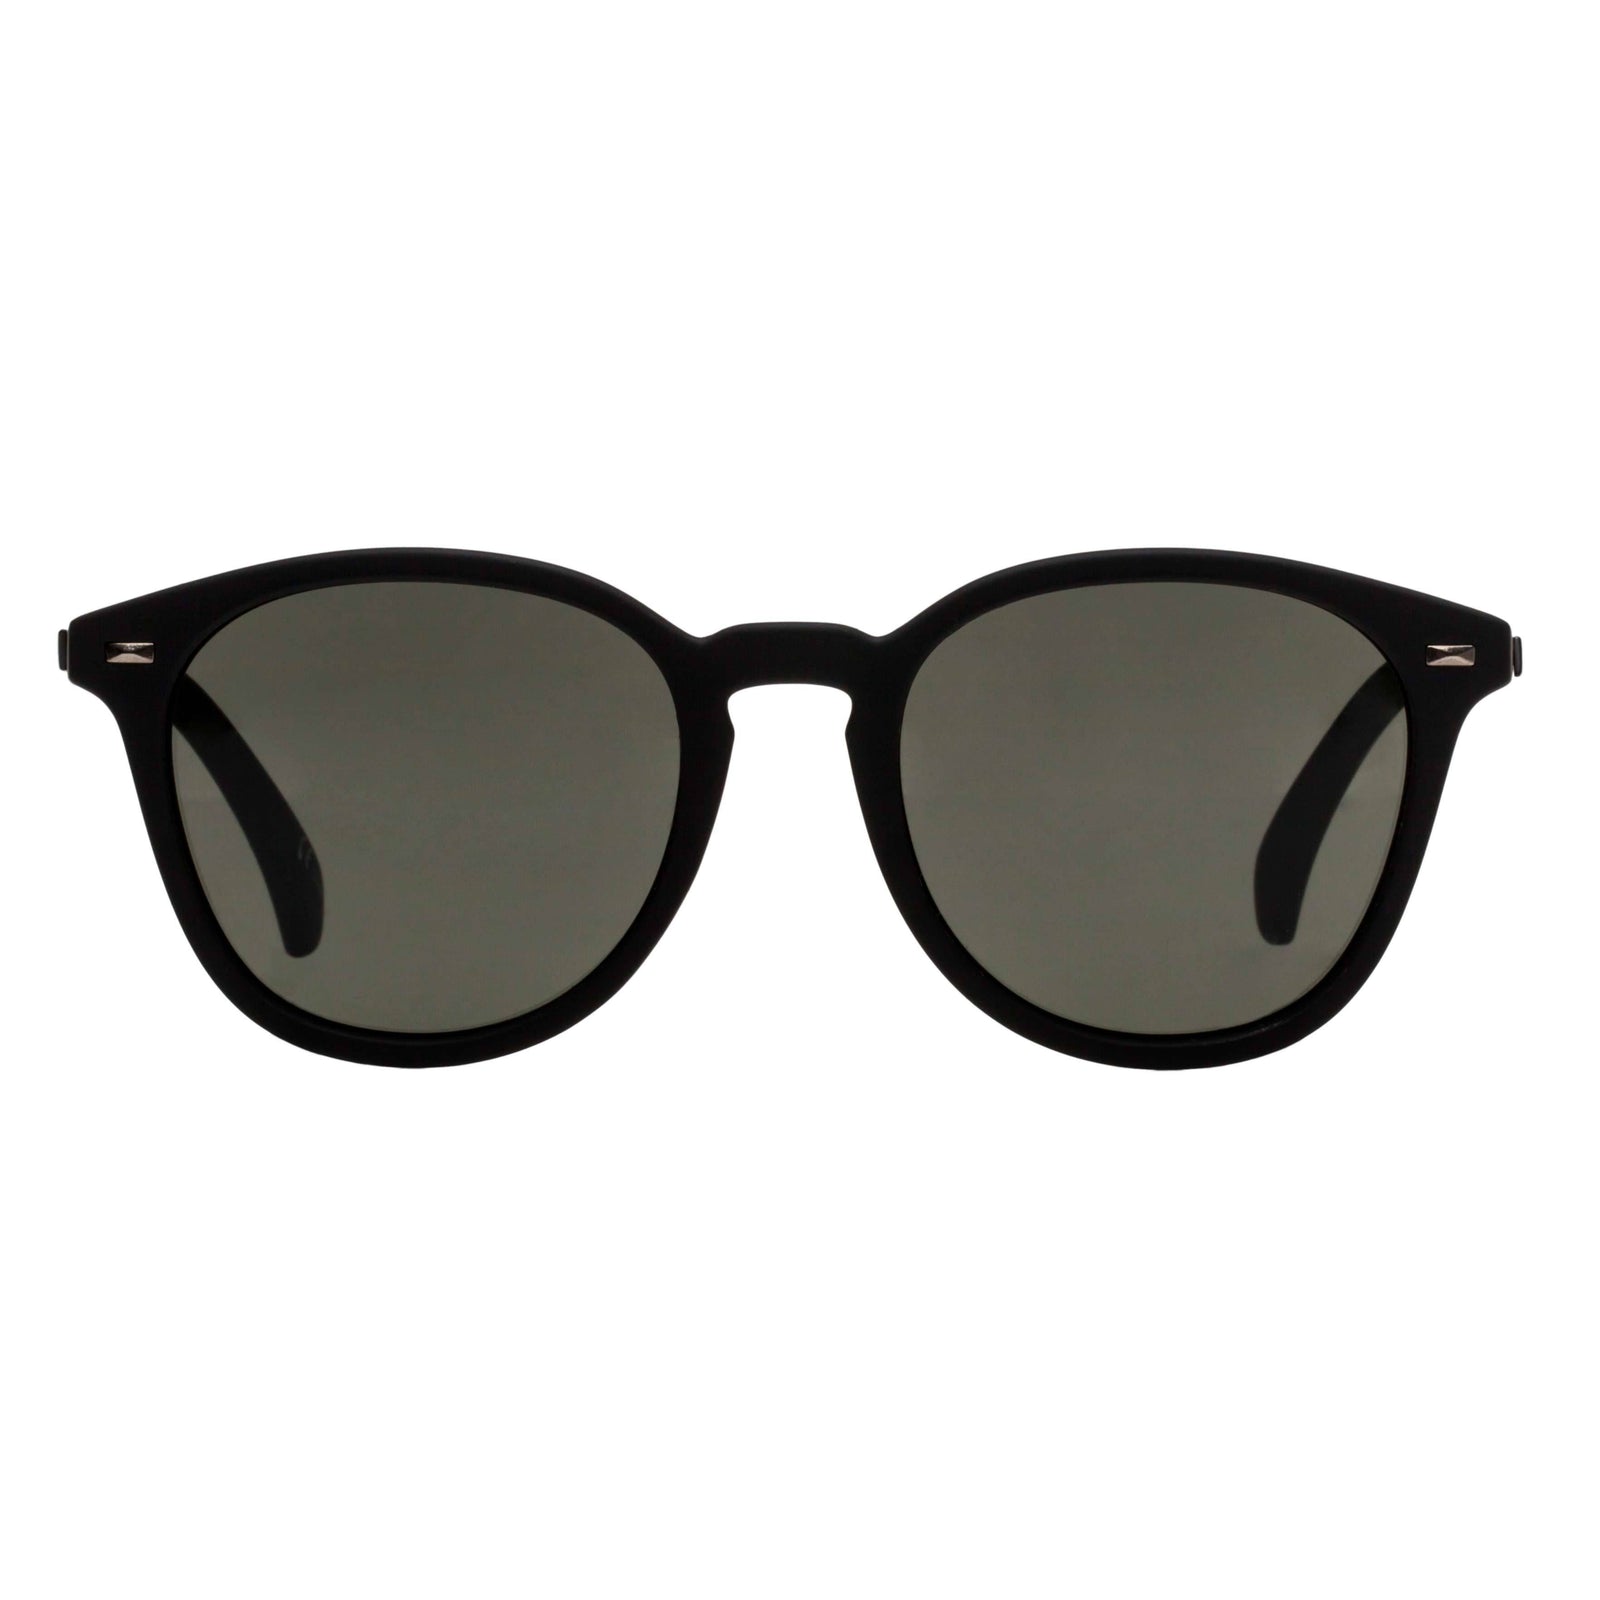 Sunglasses | Tort Black Specs Round Le Bandwagon Uni-Sex